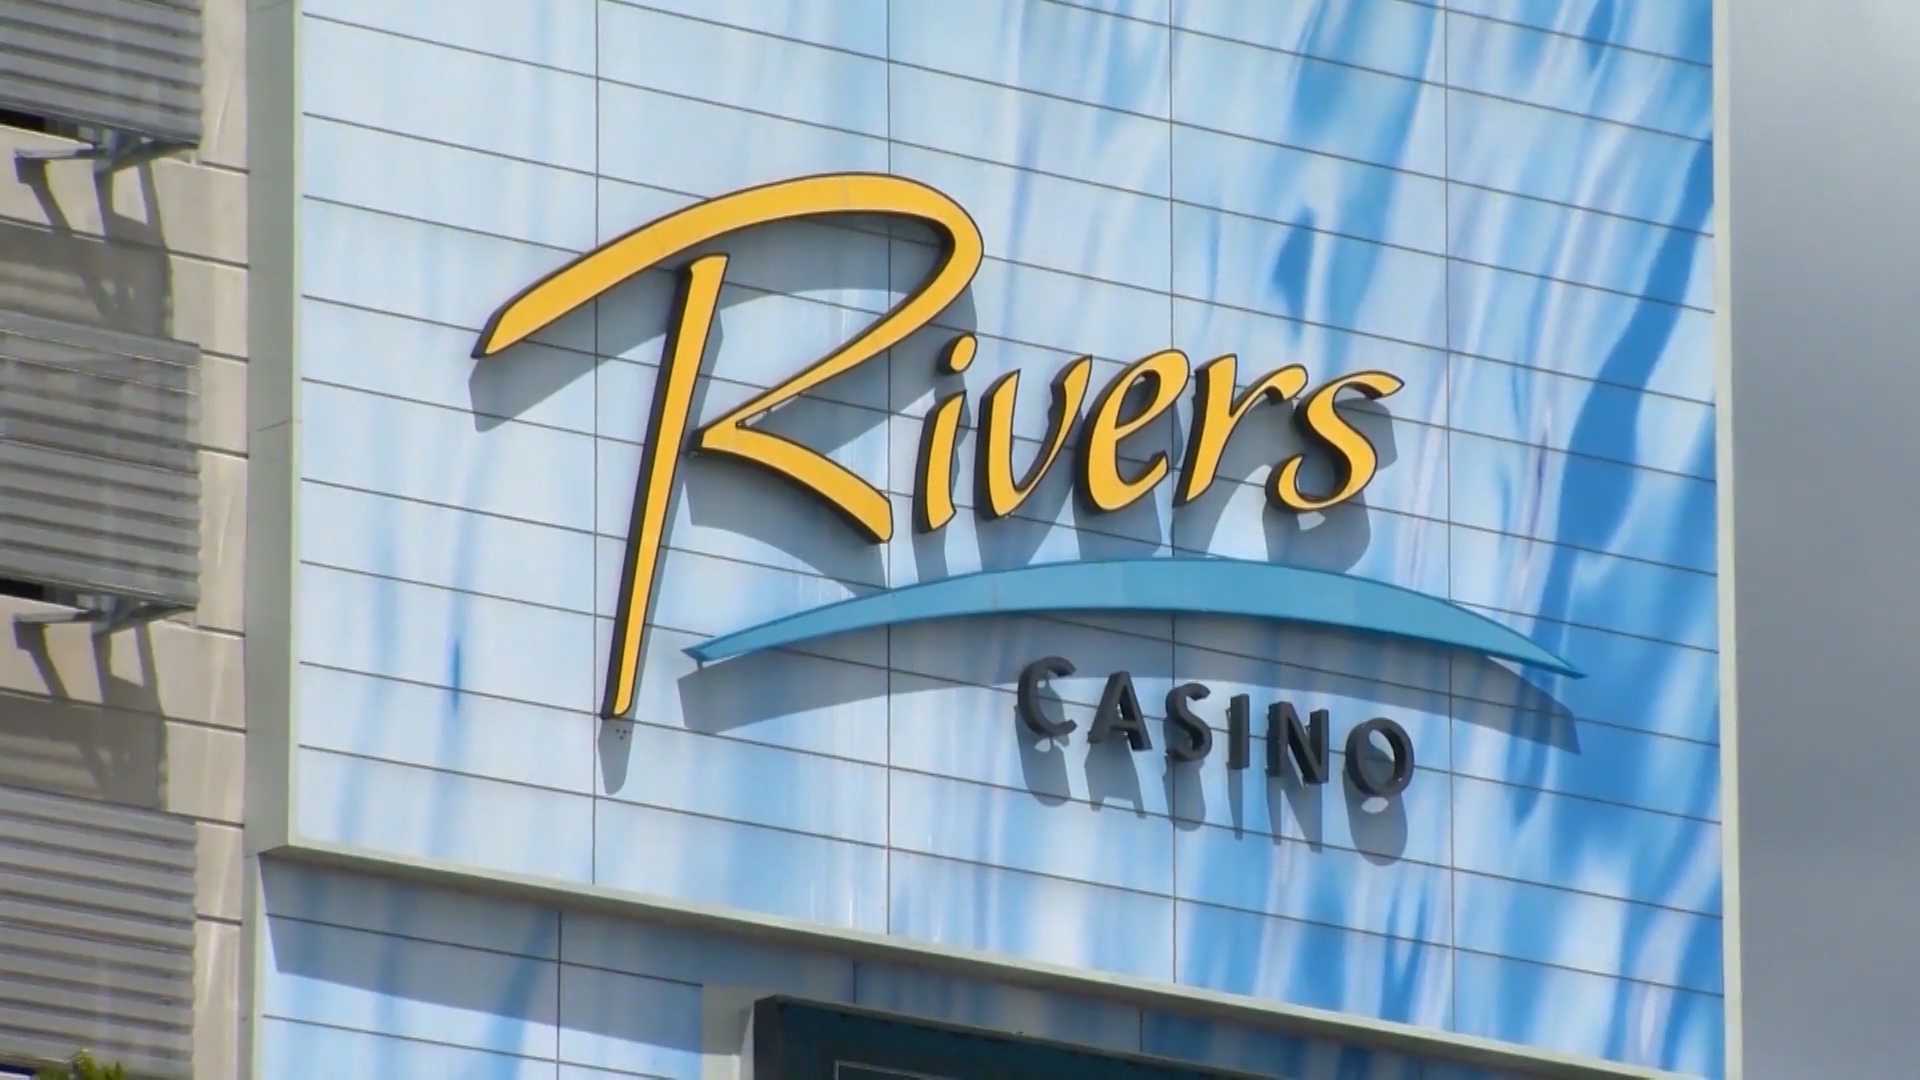 rivers casino job fair chicago